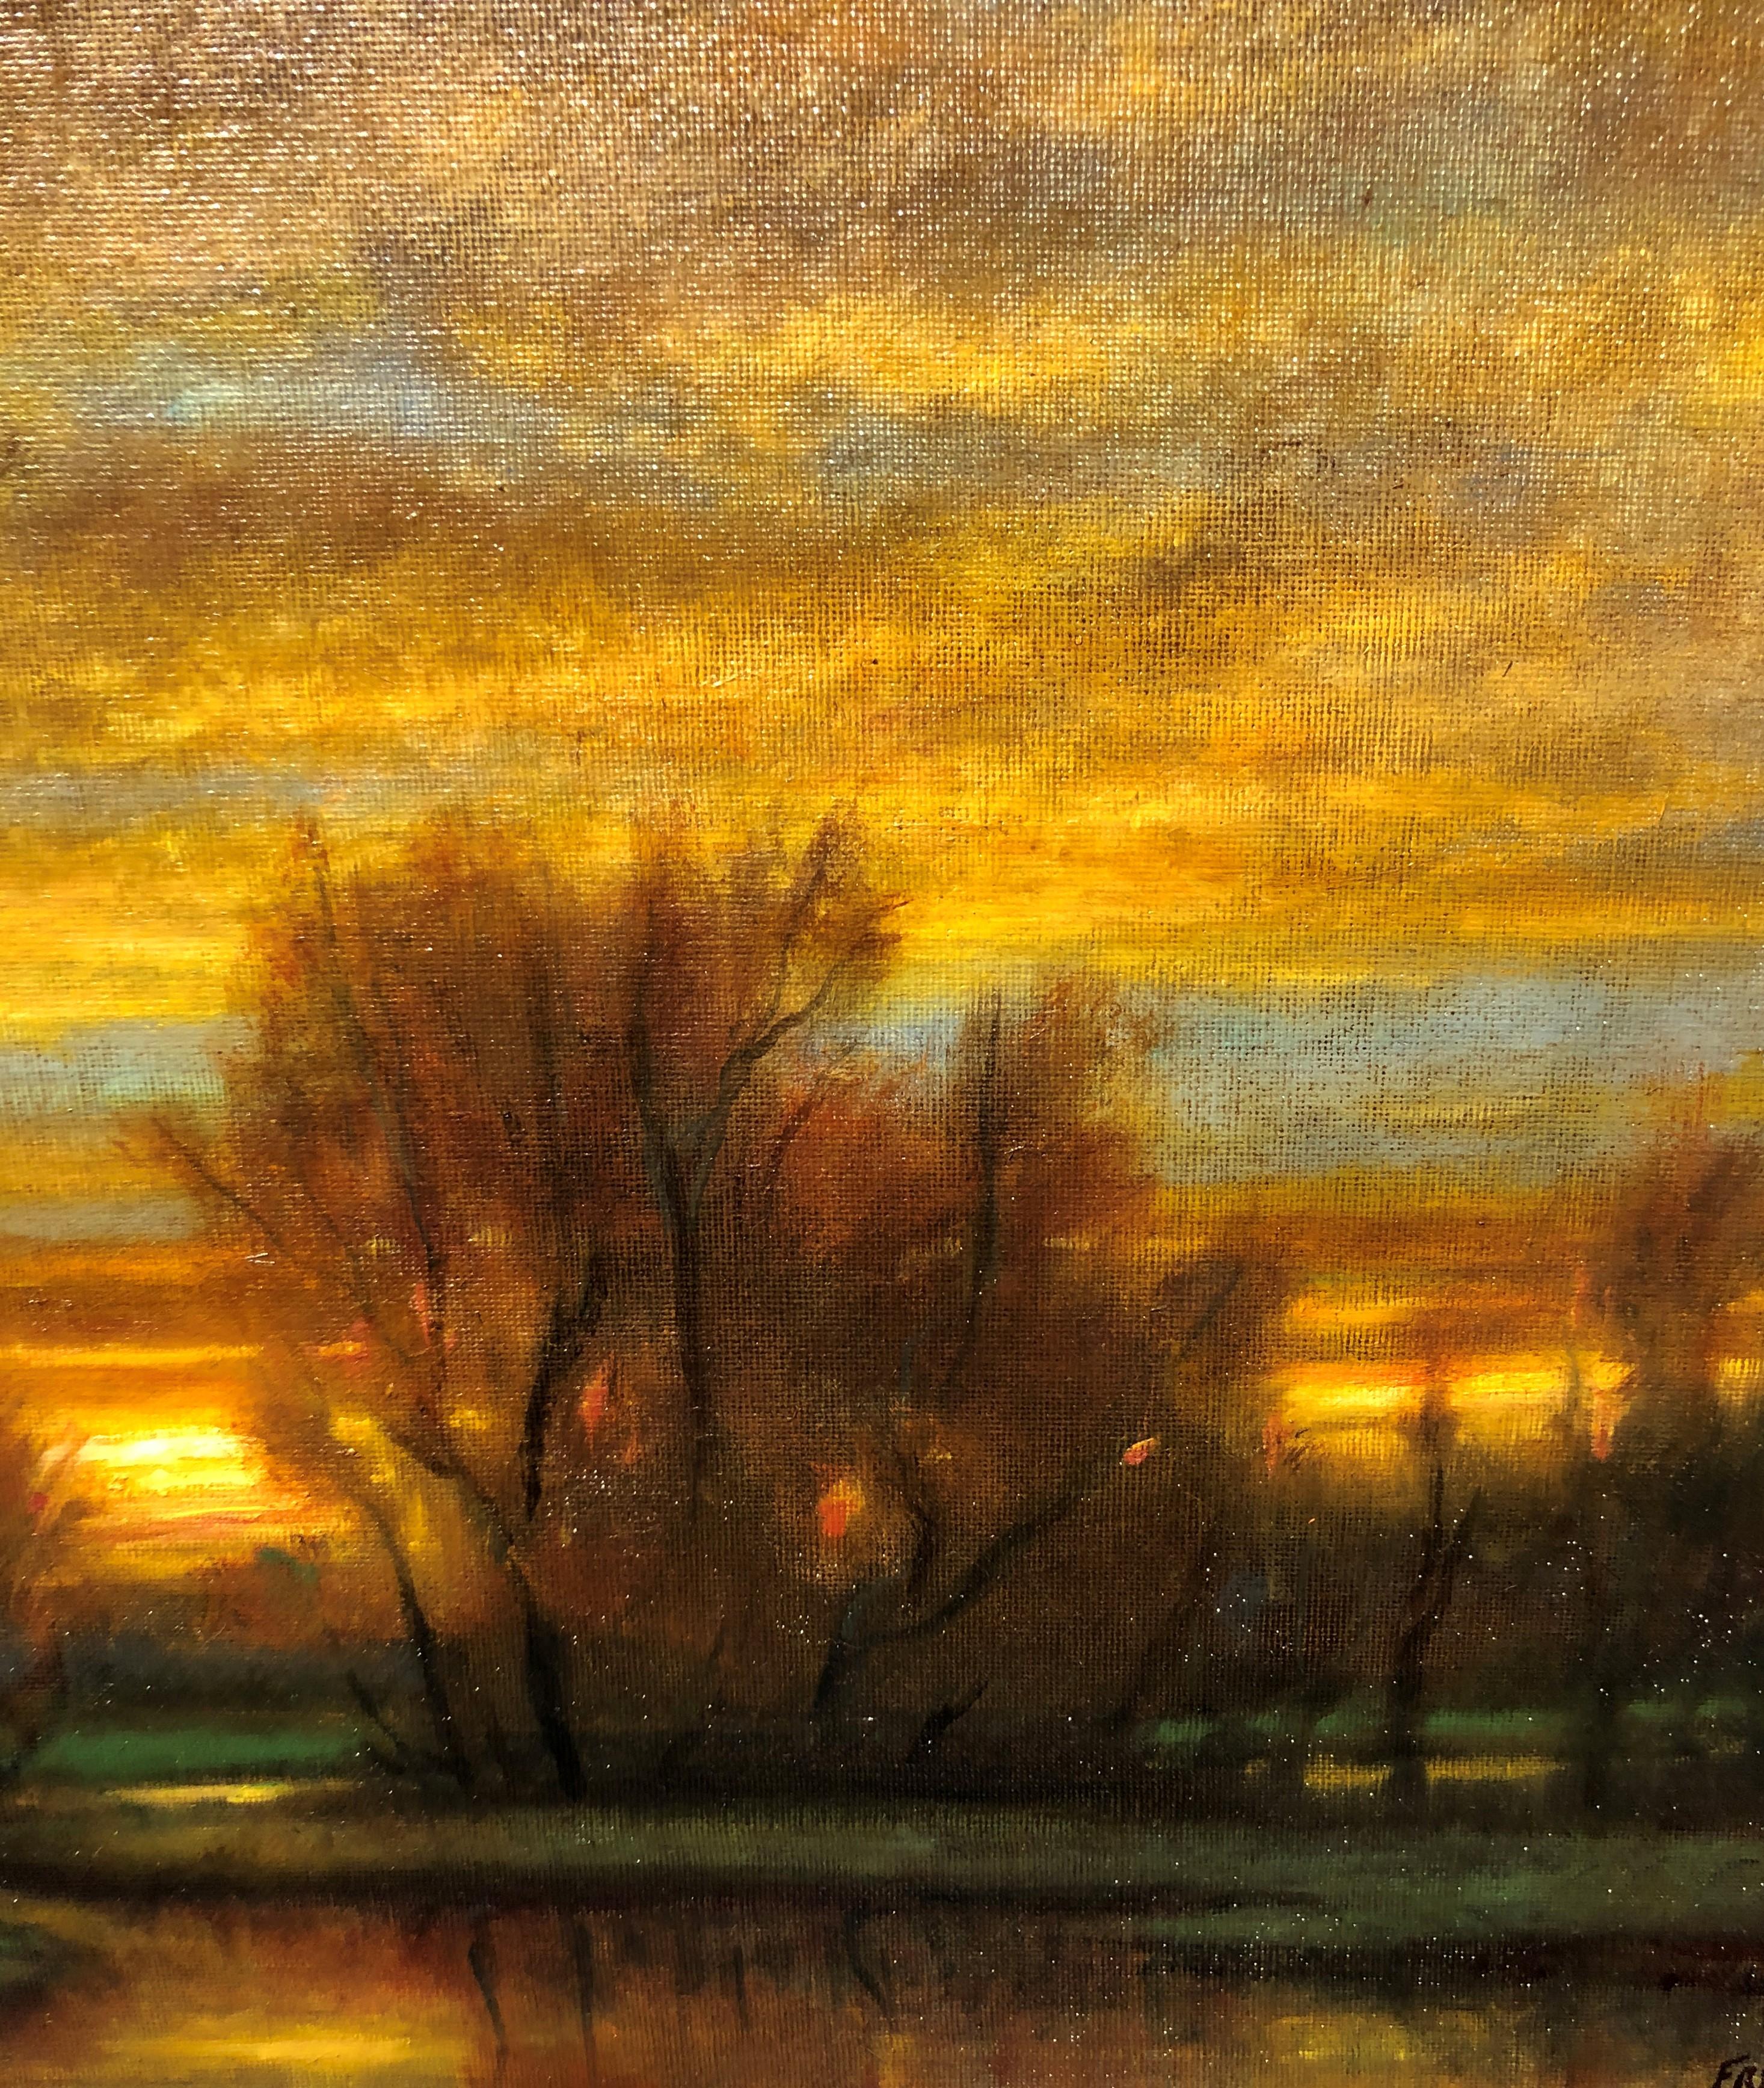 Burning Desire - Original Oil Painting, Soft Light Reflecting Romantic Colors 7